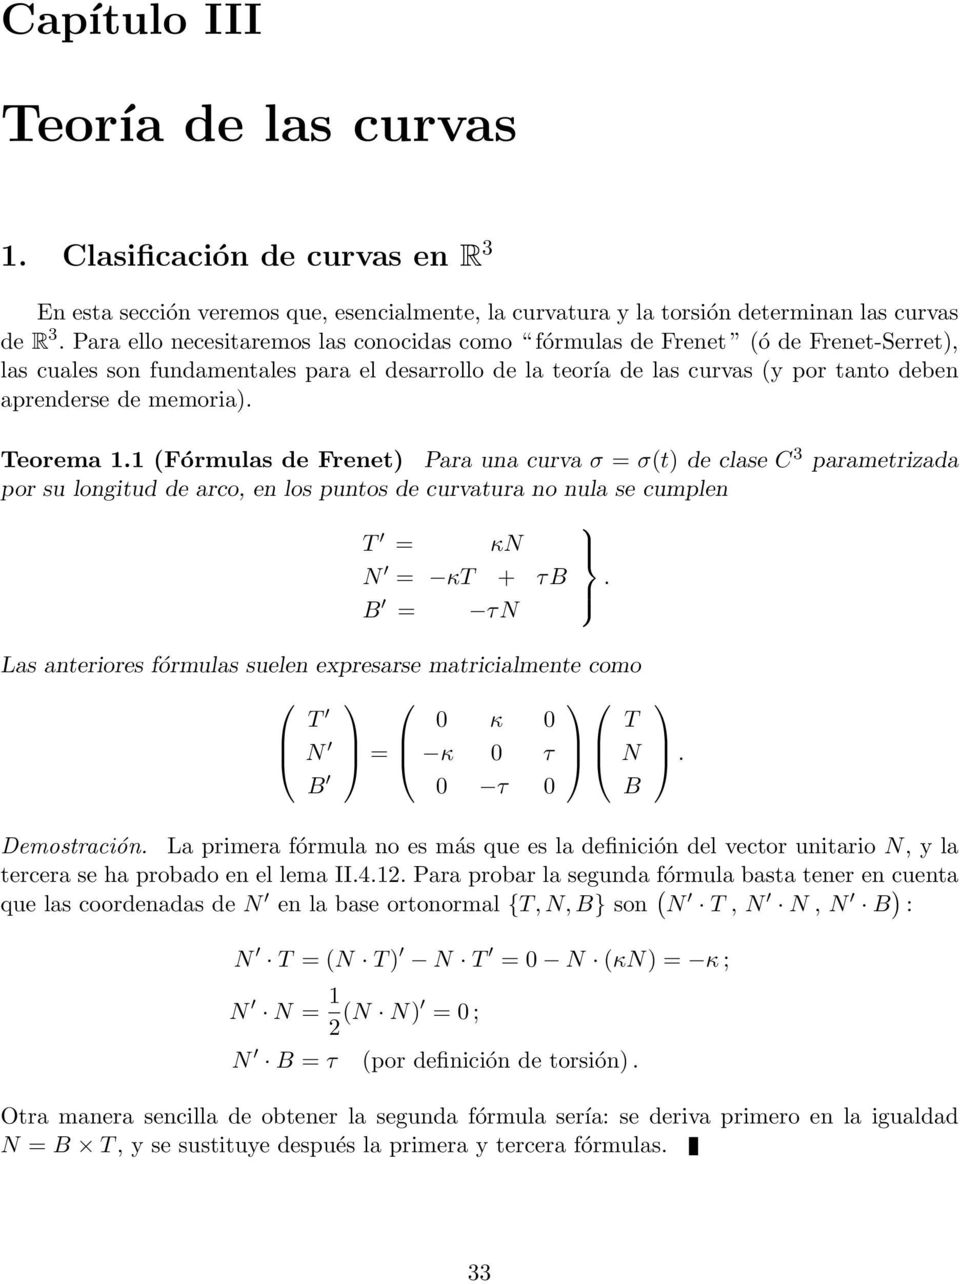 Teorema 1.1 Fórmulas de Frenet Para una curva σ = σt de clase C 3 parametrizada por su longitud de arco, en los puntos de curvatura no nula se cumplen T = κn N = κt + τb B = τn.